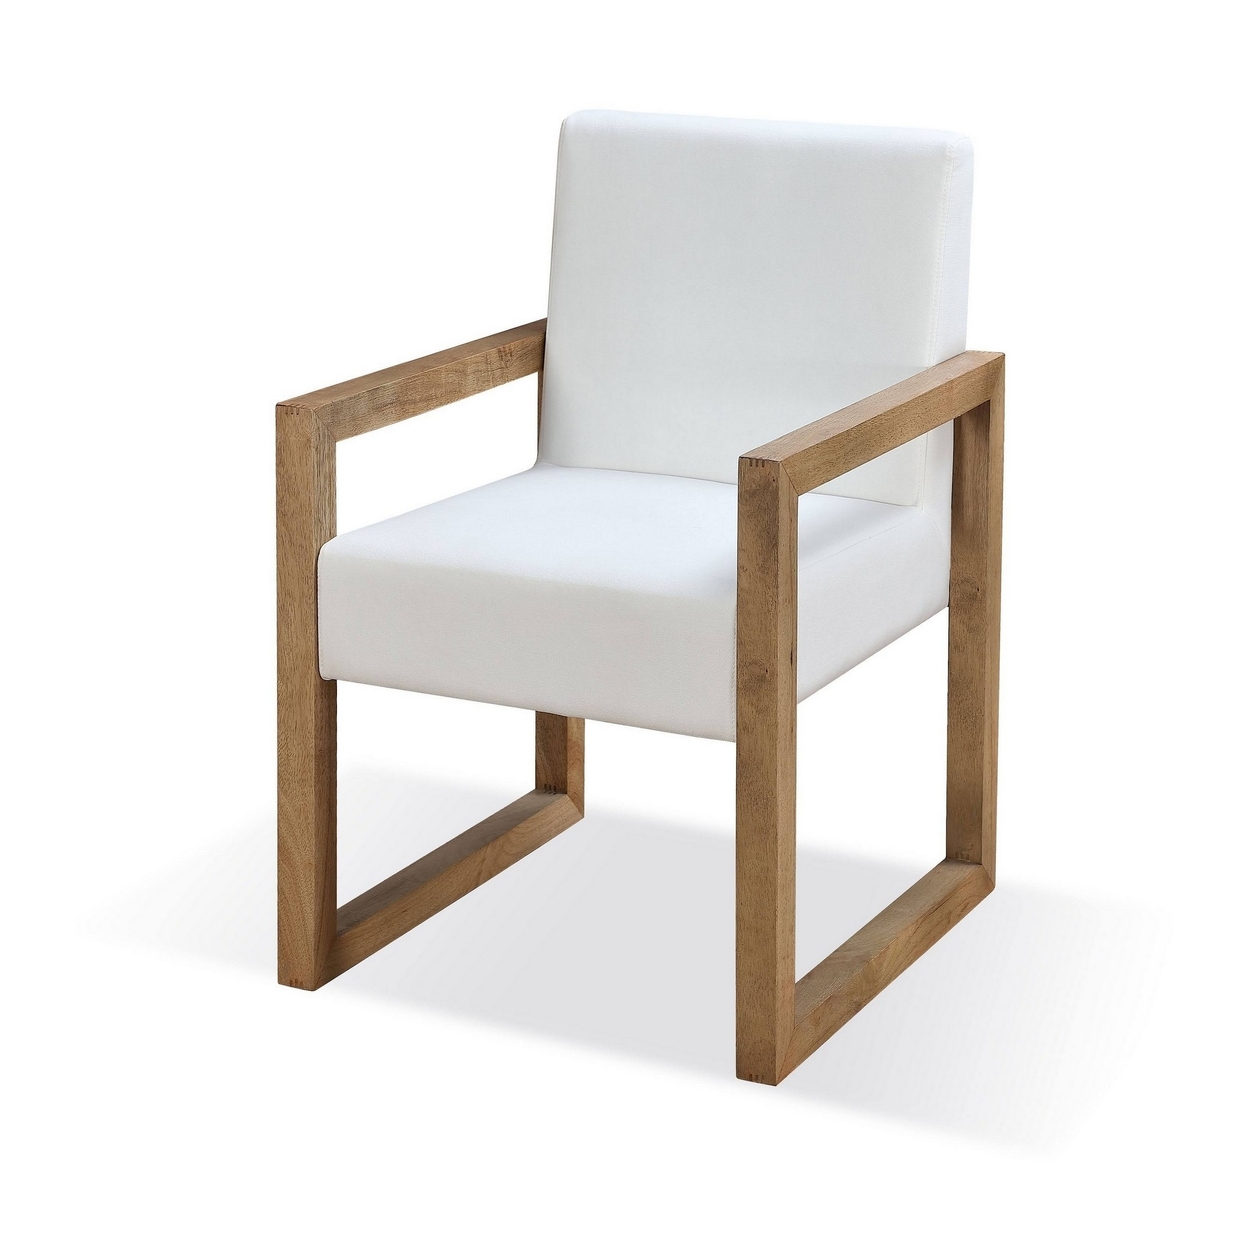 Rux 23 Inch Dining Chair, White Fabric Seat, Sled Legs, Brown Wood -Saltoro Sherpi